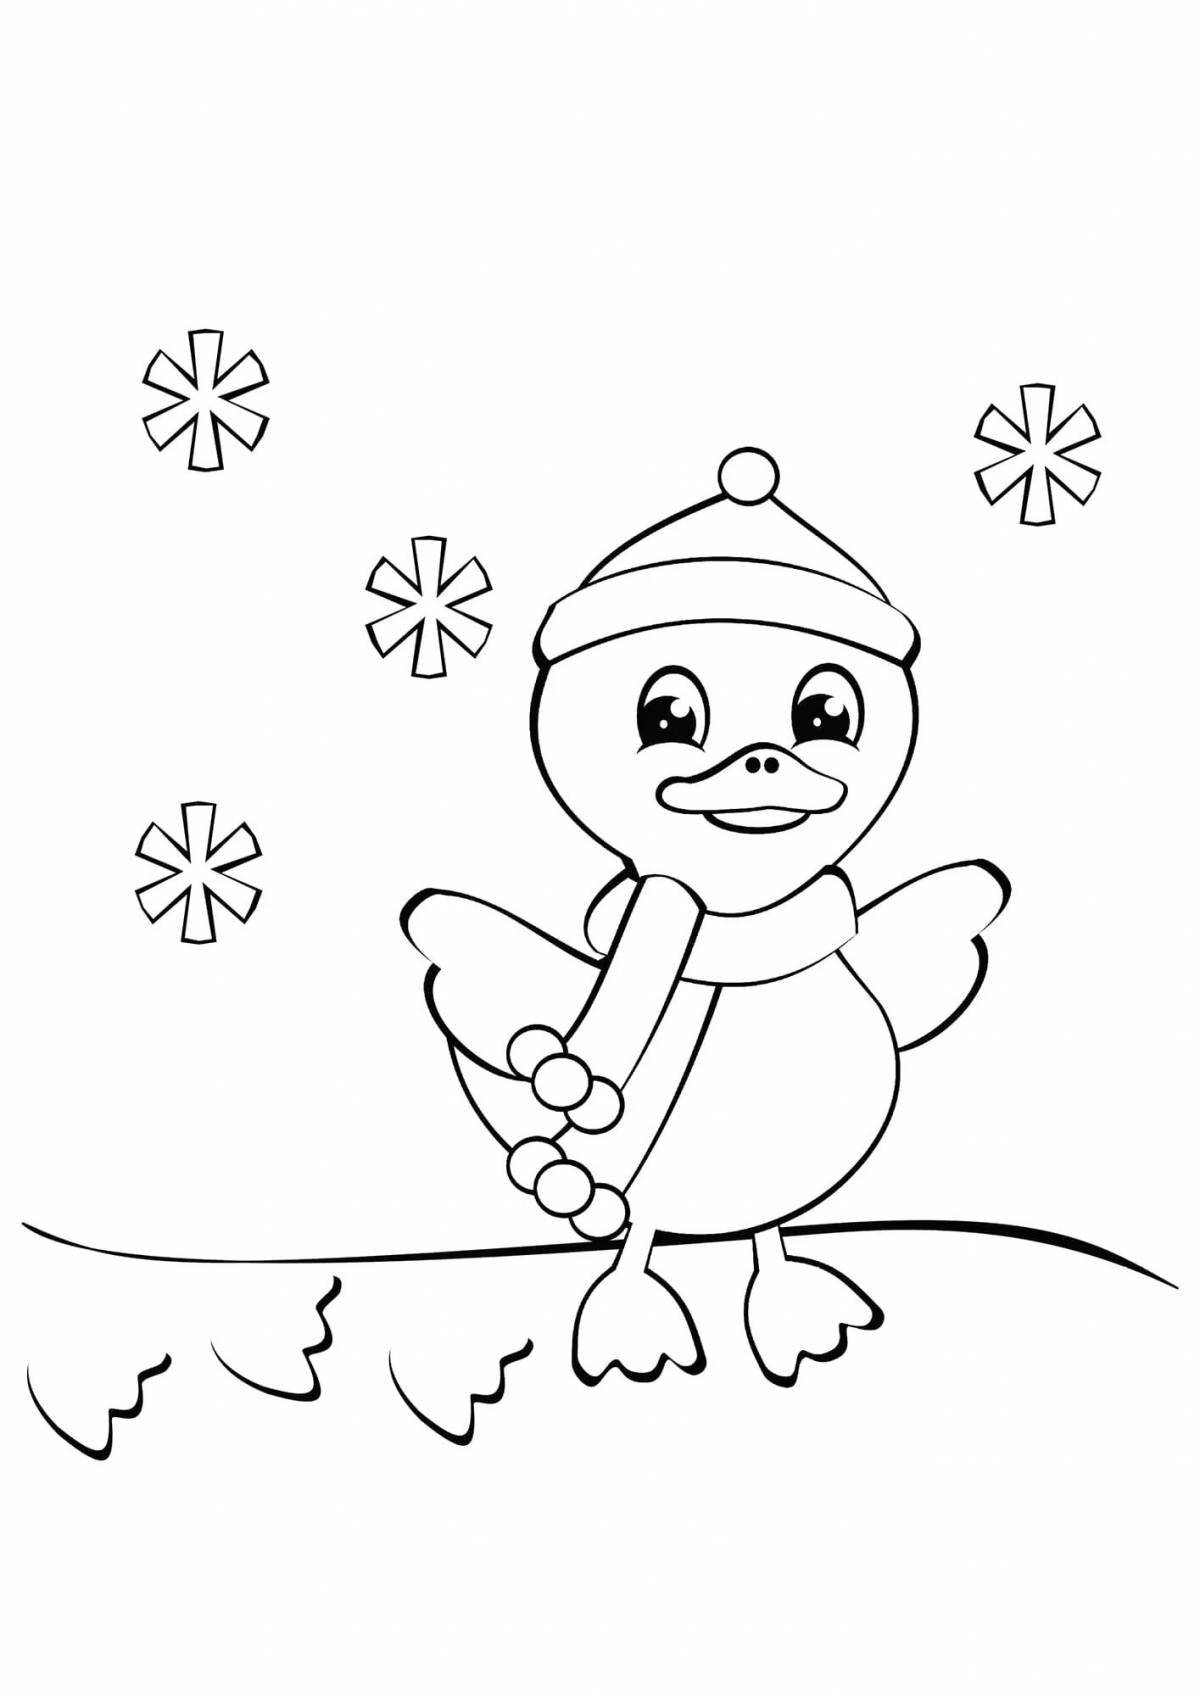 Забавная раскраска зима для детей 4 лет